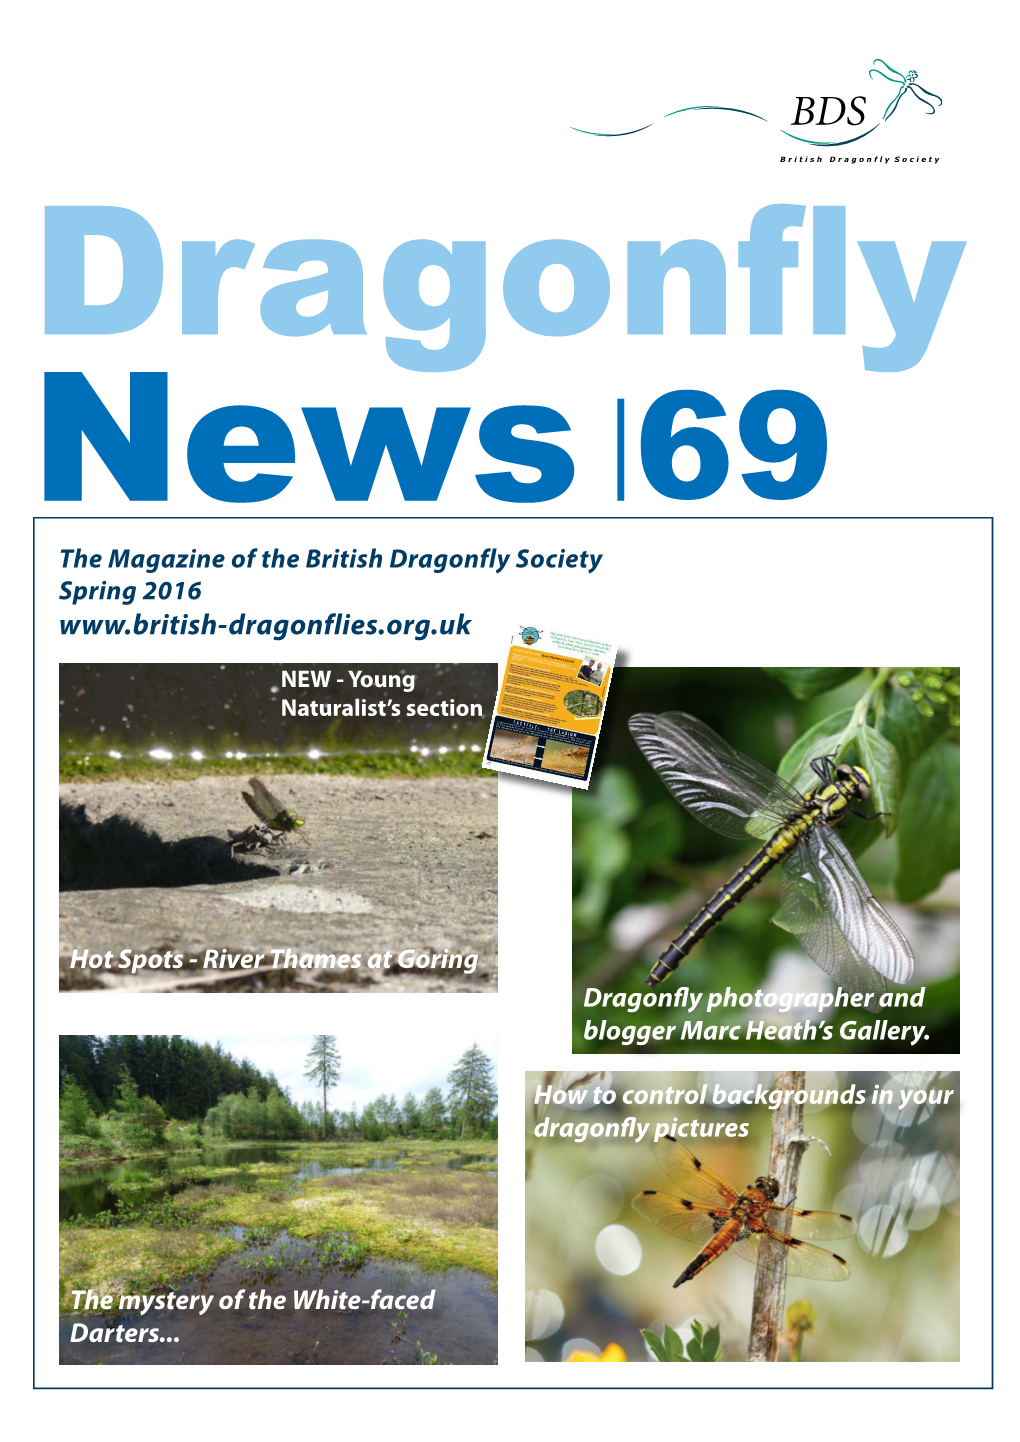 Dragonfly News 69 the Magazine of the British Dragonfly Society Spring 2016